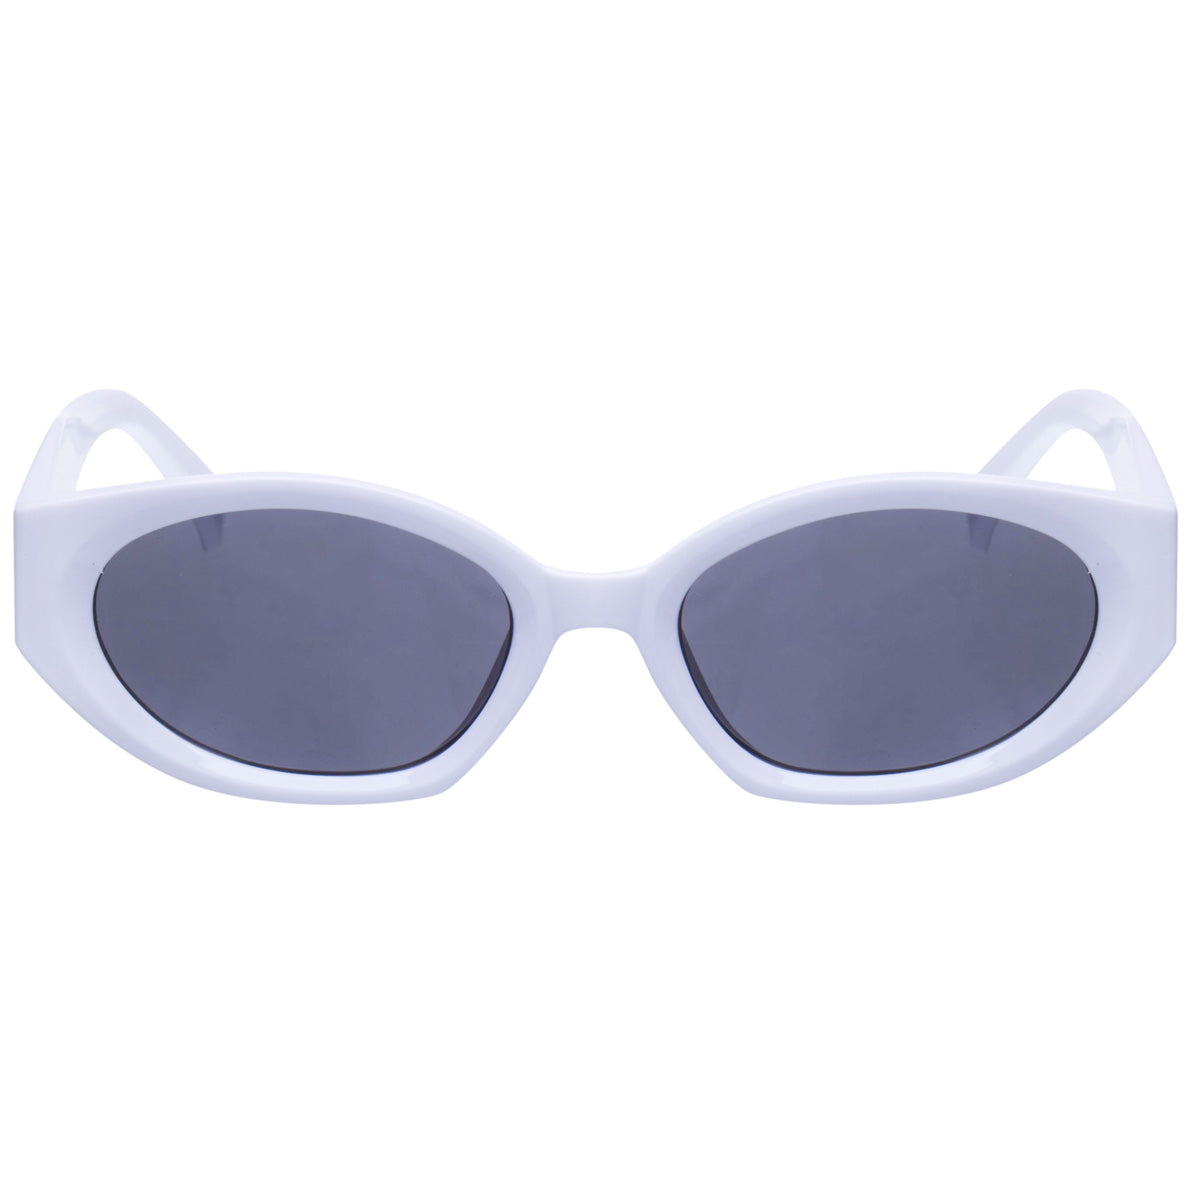 Oval angled sunglasses